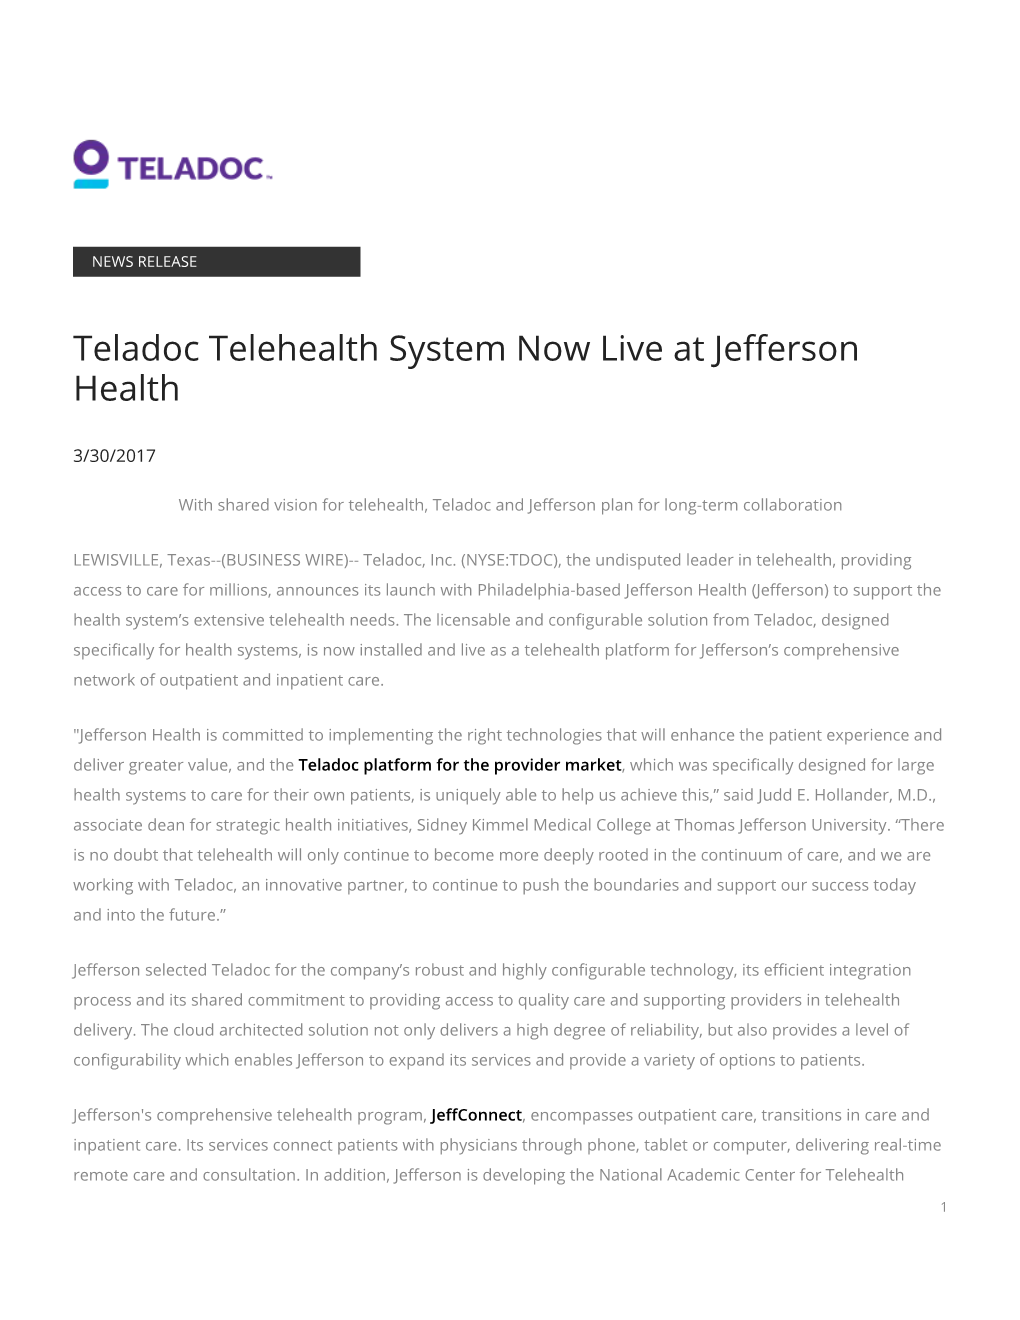 Teladoc Telehealth System Now Live at Jefferson Health